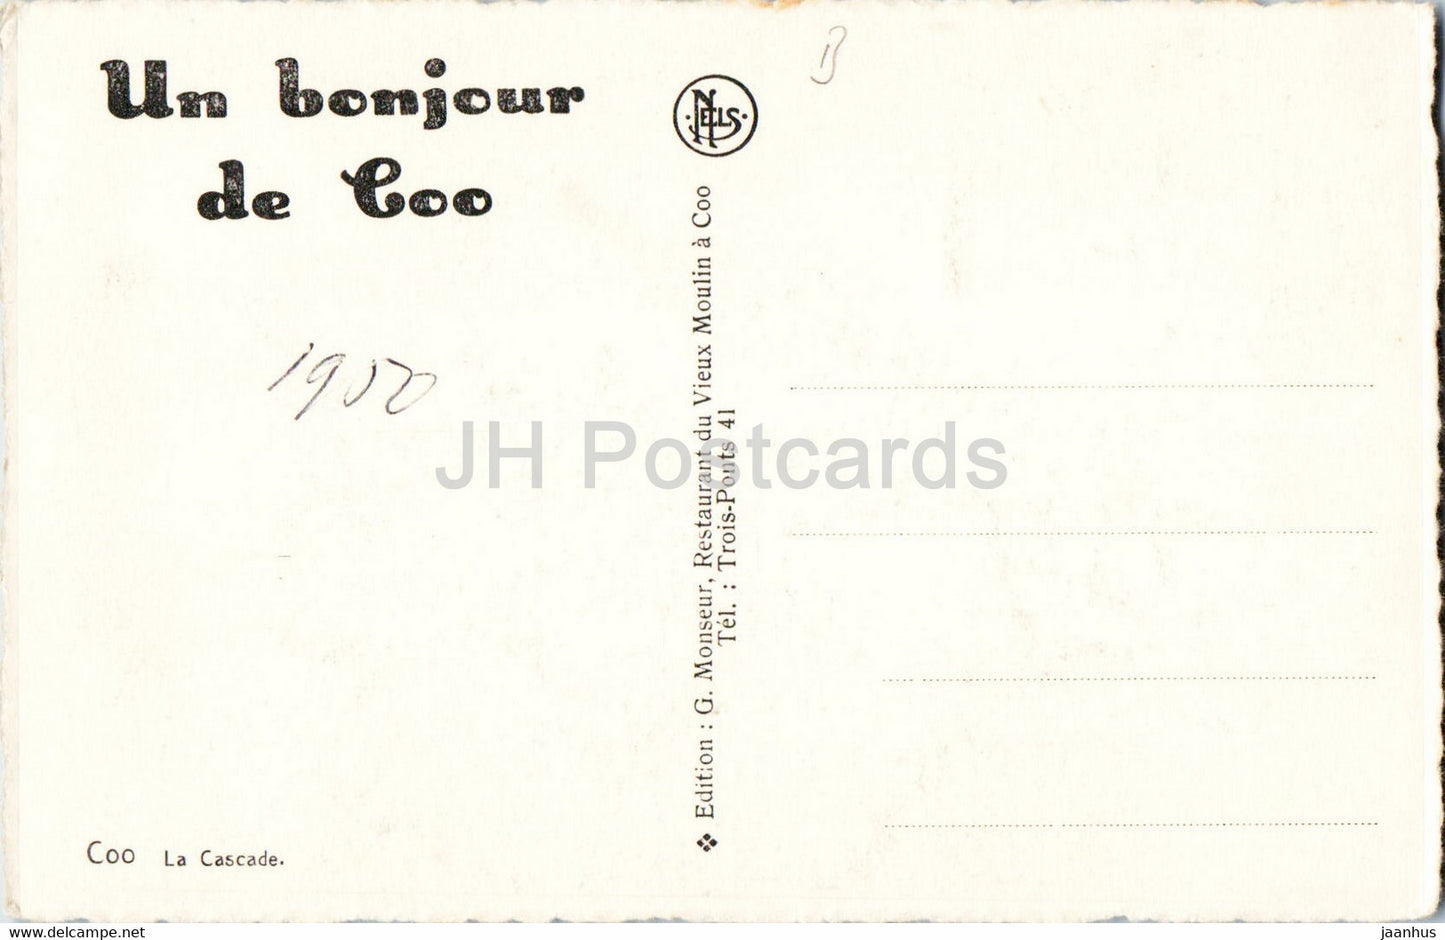 Coo - La Cascade - old postcard - Belgium - used